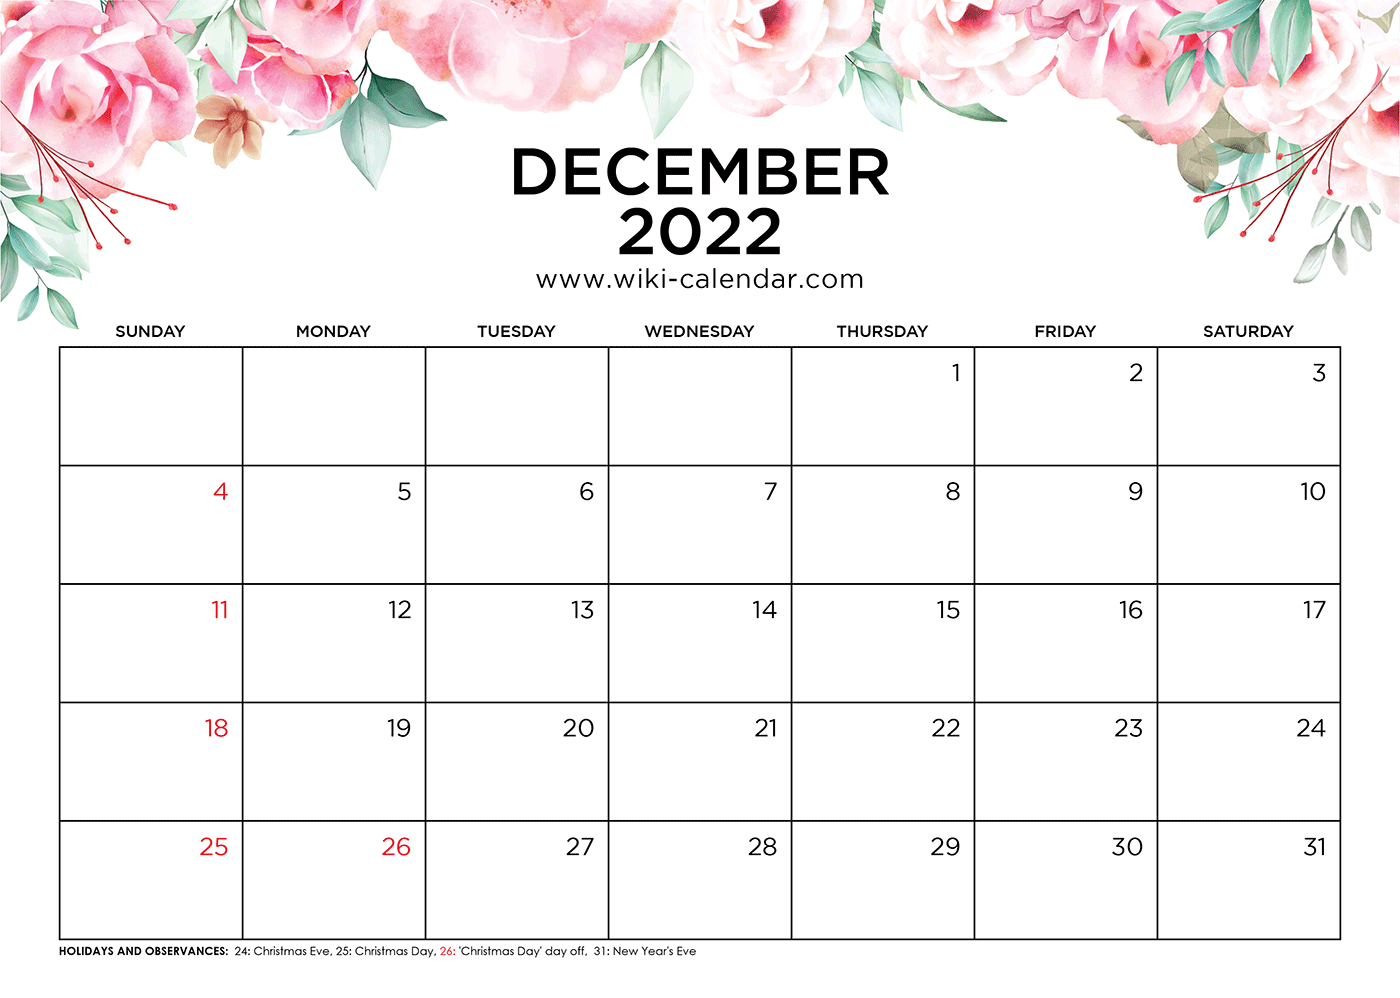 December Calendar 2022 With Holidays Free Printable December 2022 Calendars - Wiki Calendar